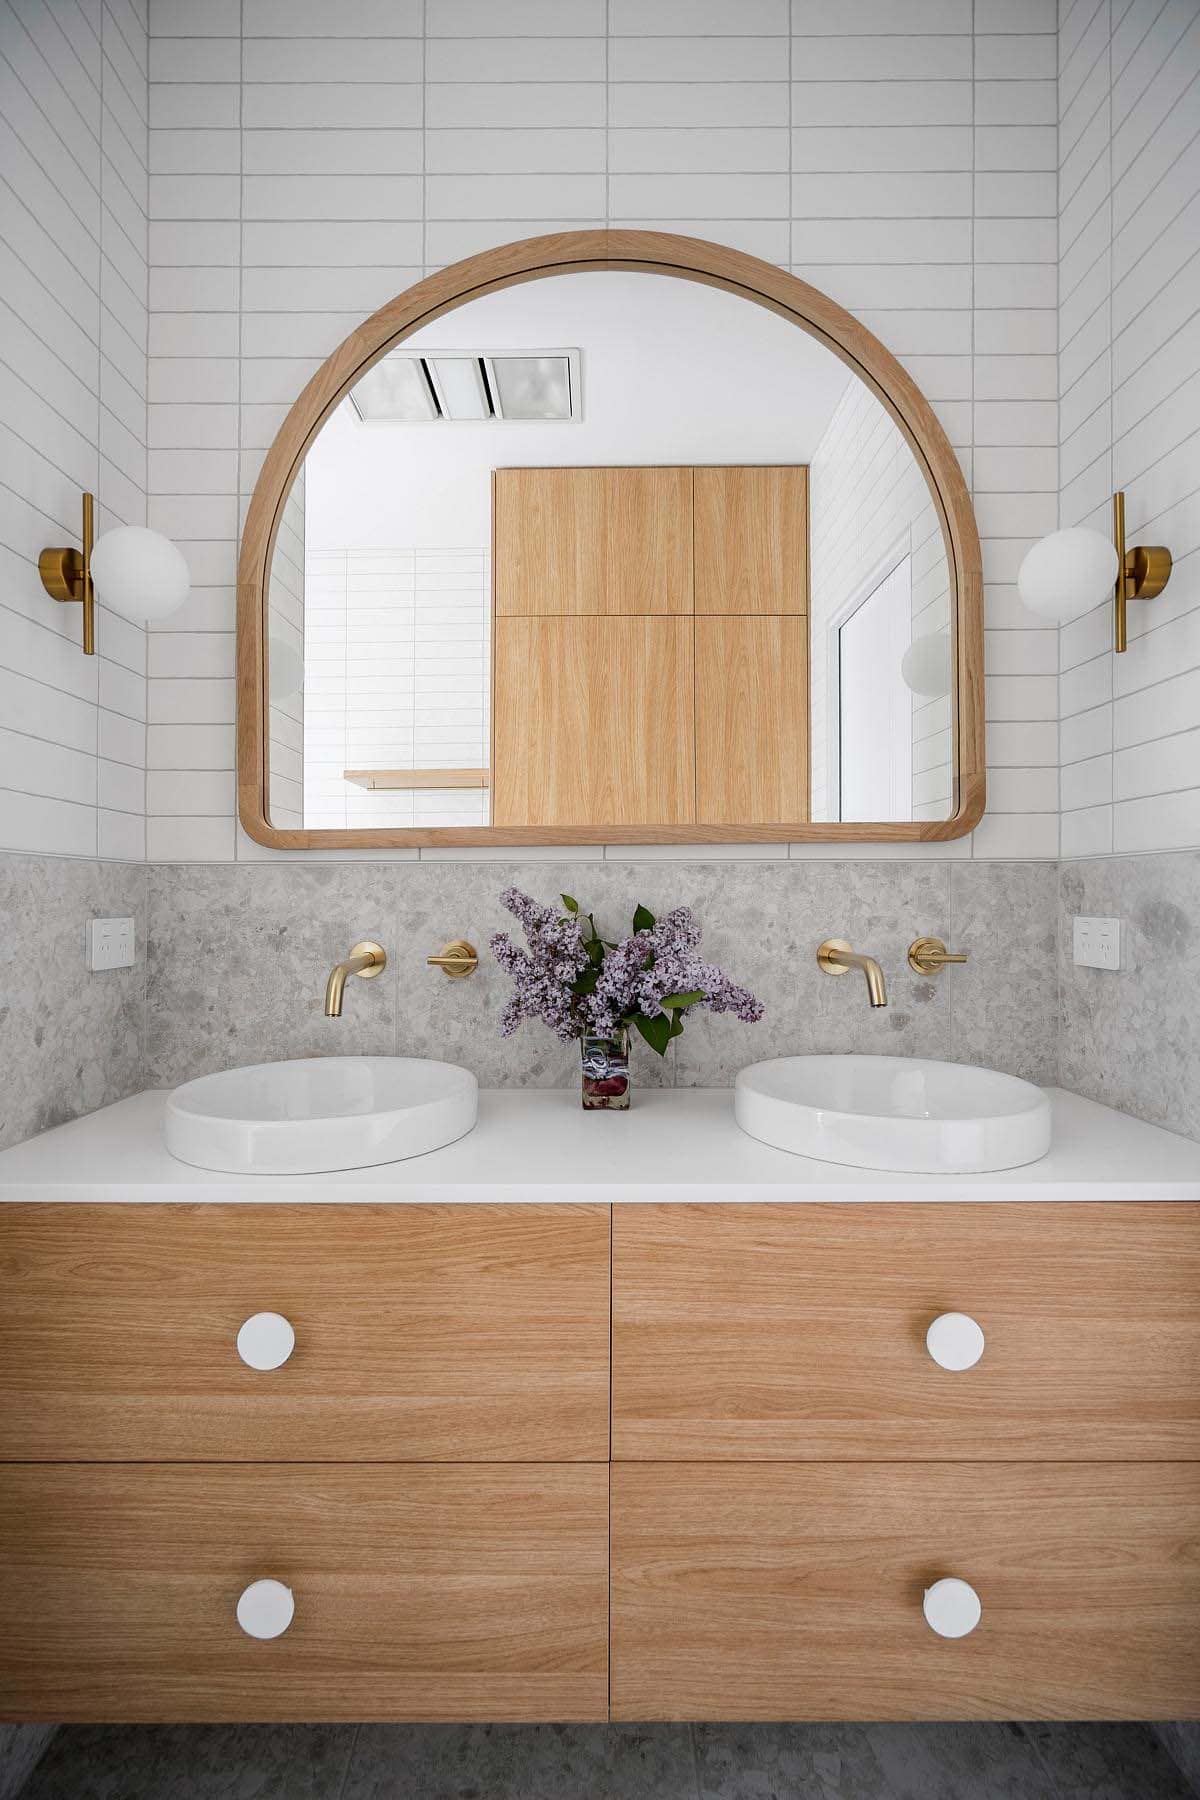 Scandinavian style bathroom vanity with a dual sink